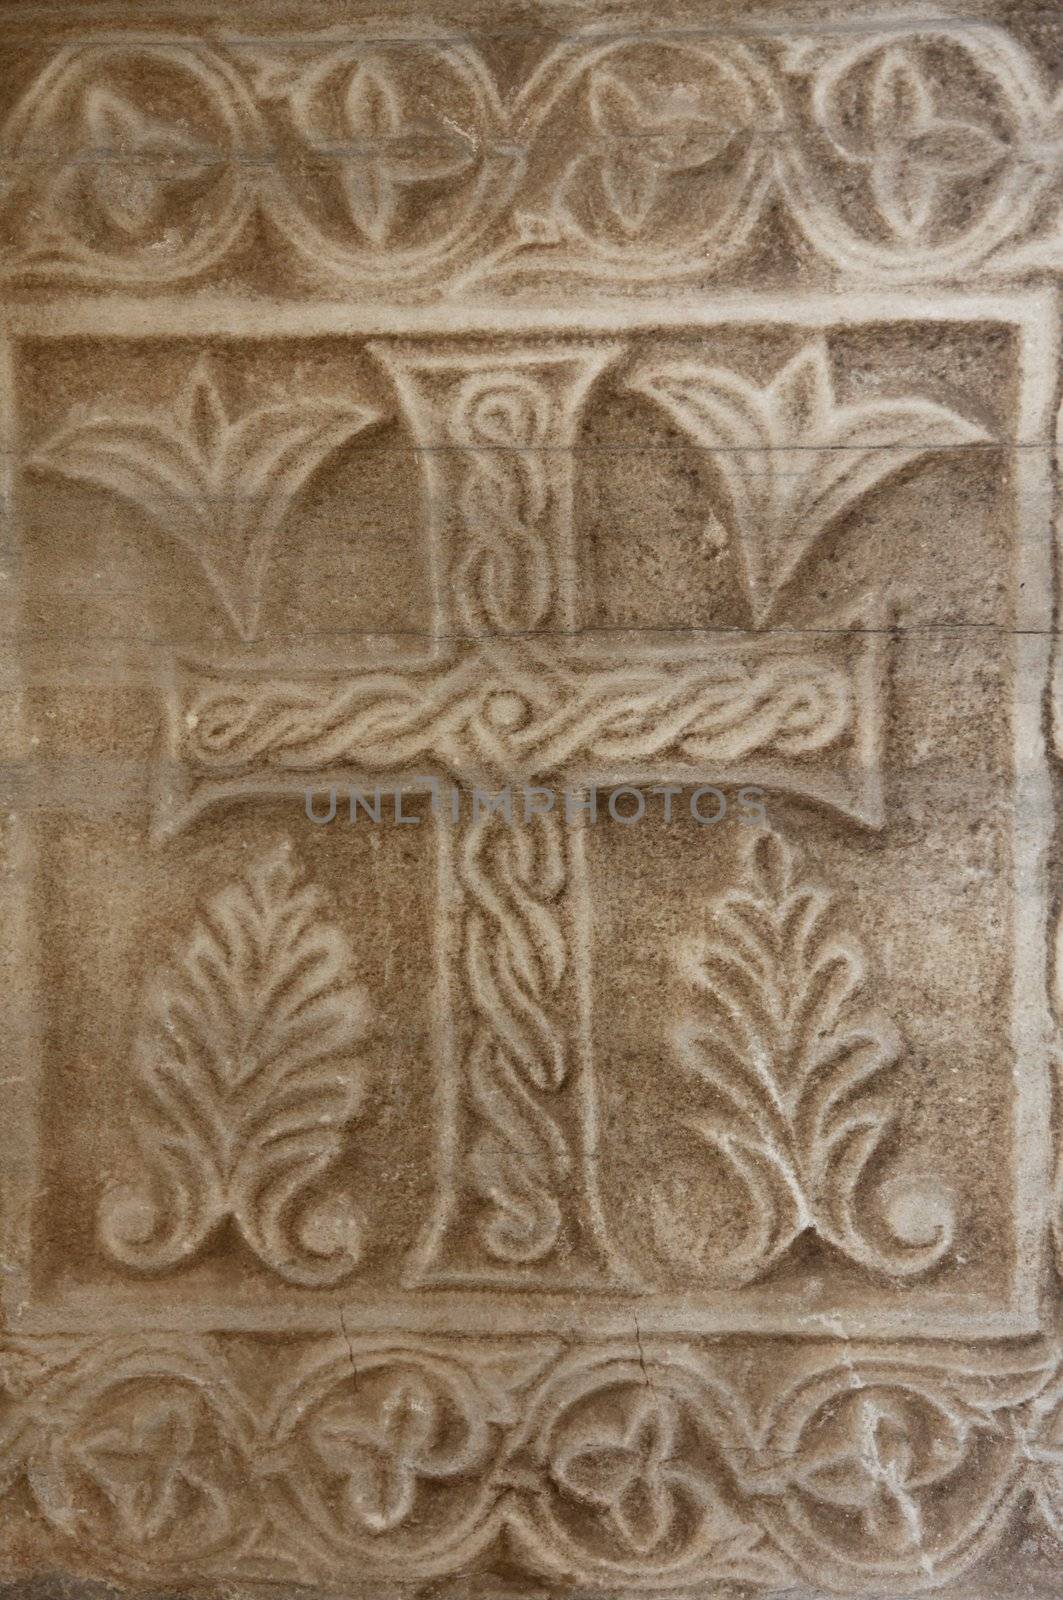 Medieval cross stone